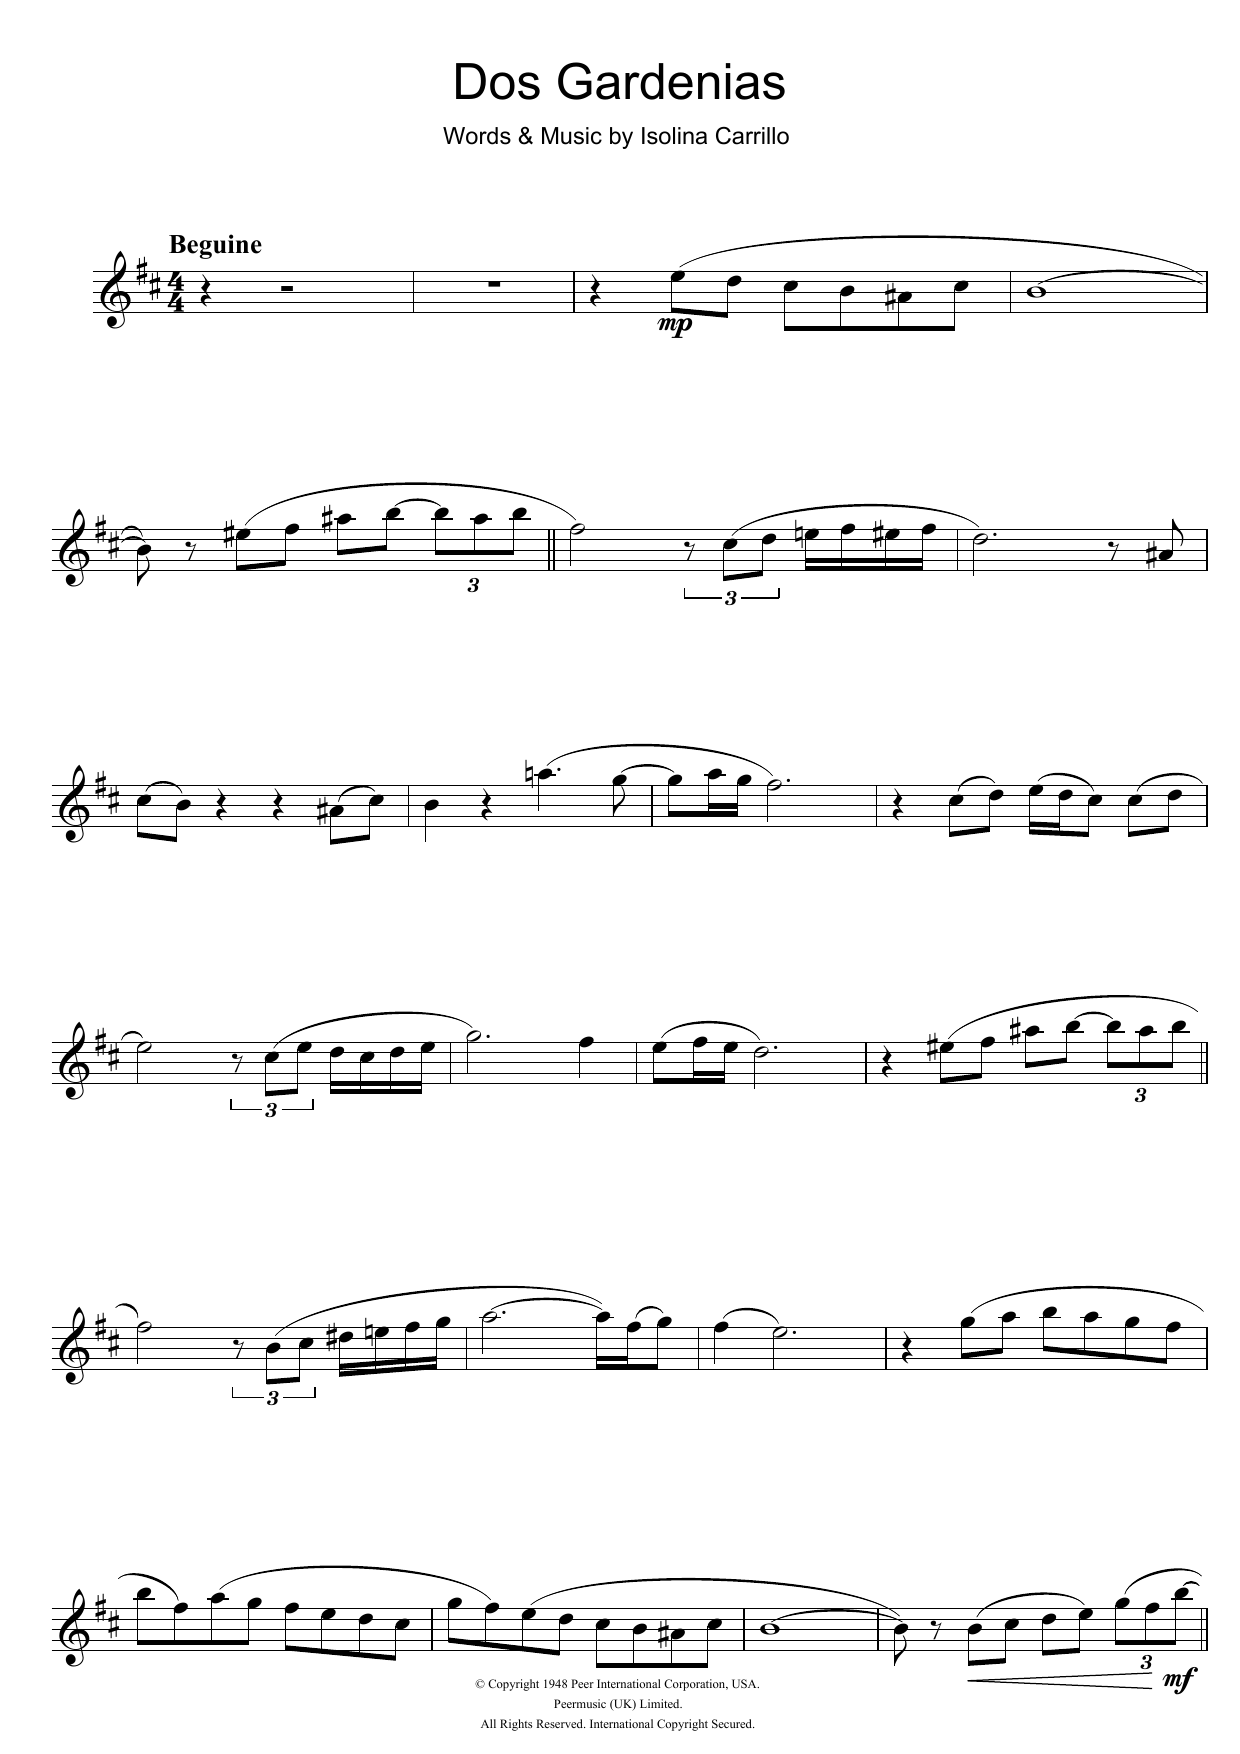 Buena Vista Social Club Dos Gardenias Sheet Music Notes & Chords for Easy Piano - Download or Print PDF